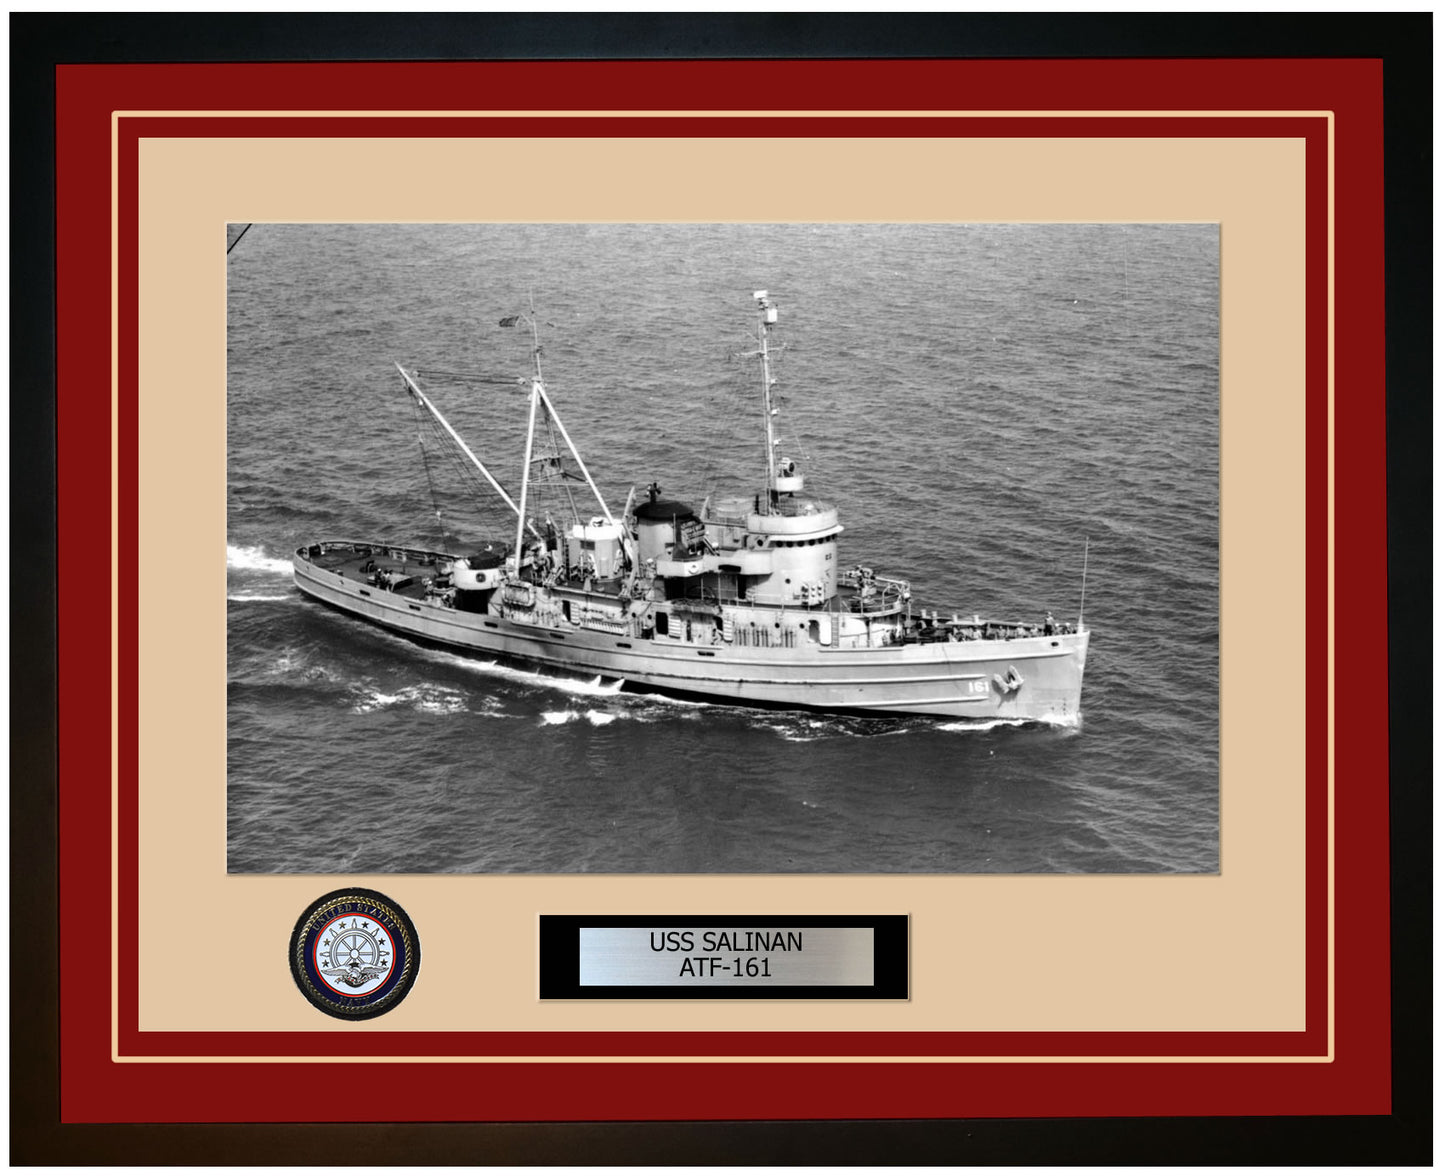 USS SALINAN ATF-161 Framed Navy Ship Photo Burgundy